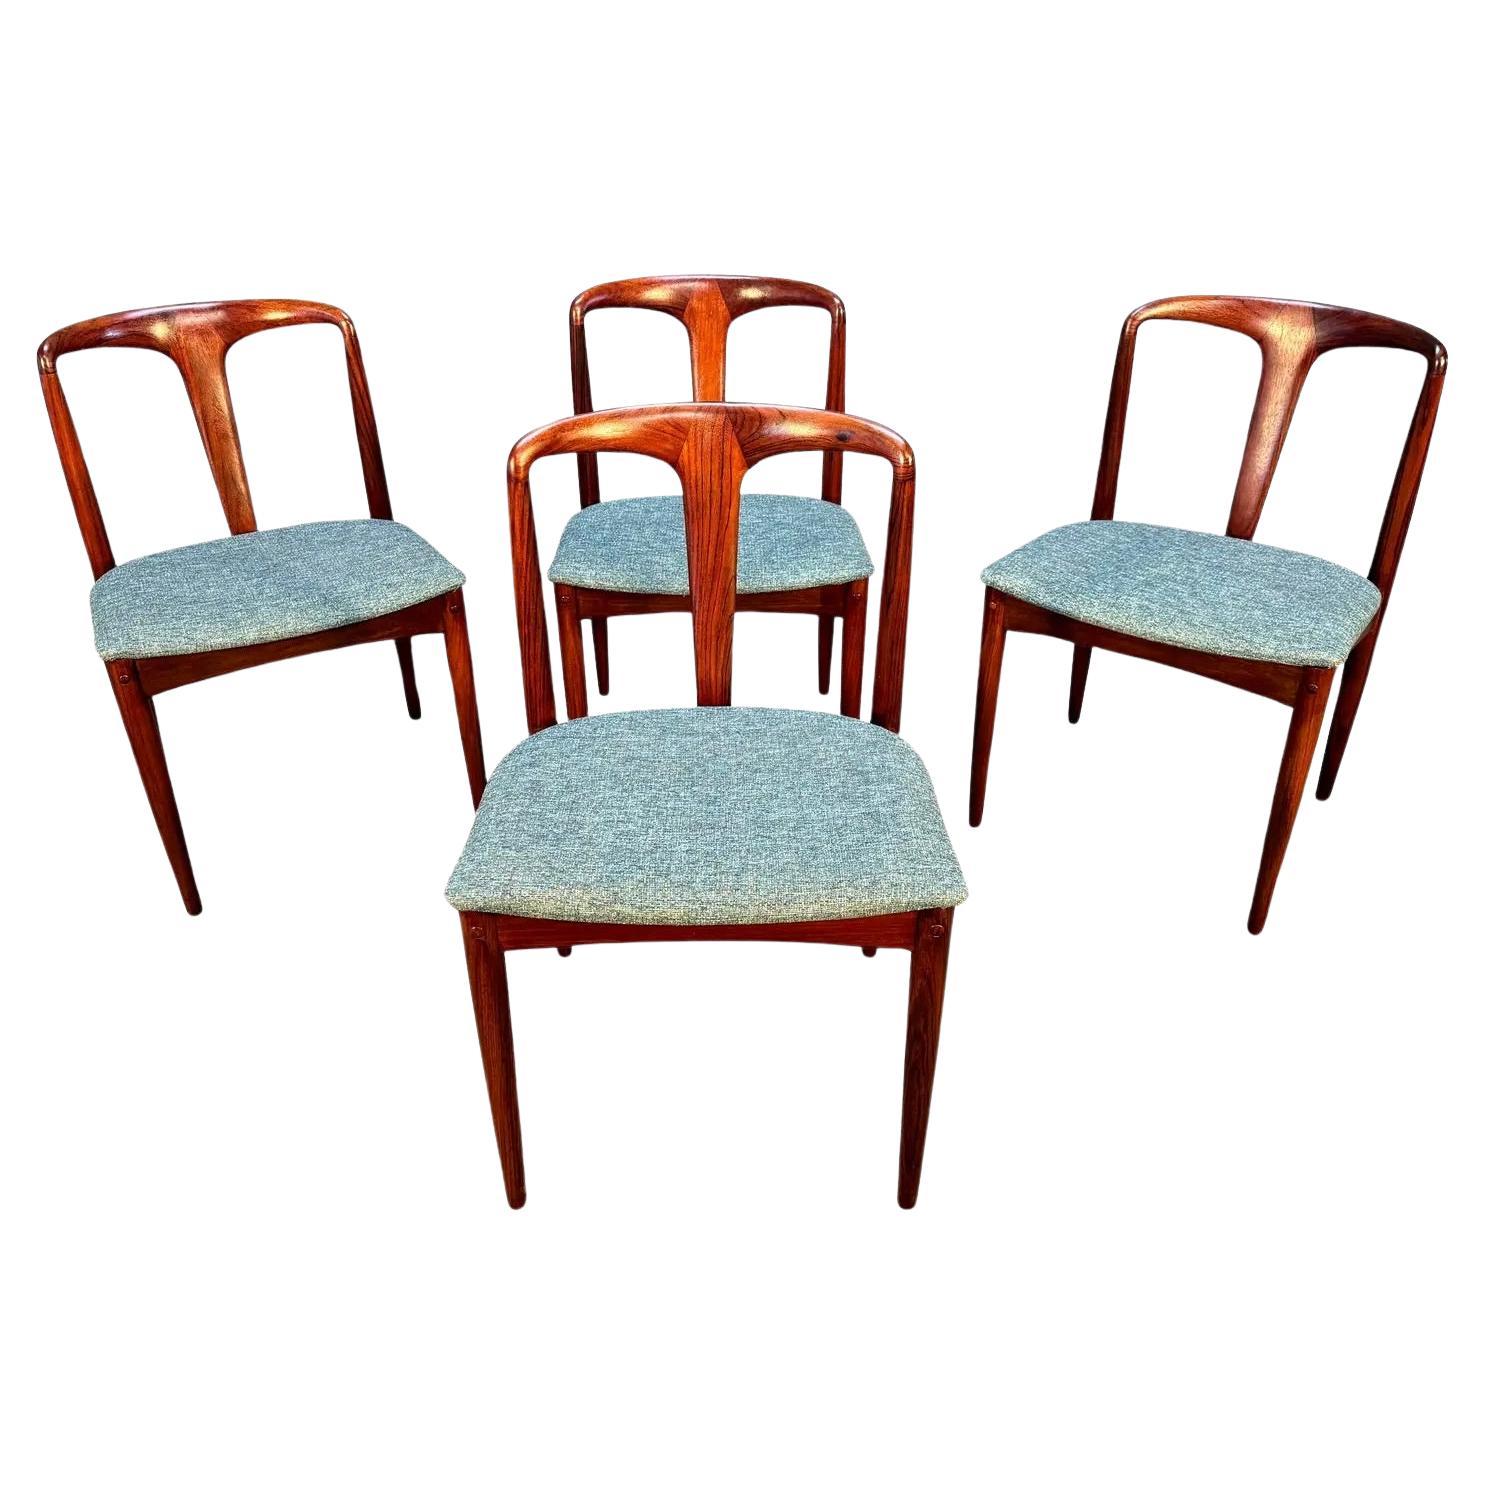 4 Vintage Danish Mid Century Modern Rosewood "Julianne" Dining Chairs